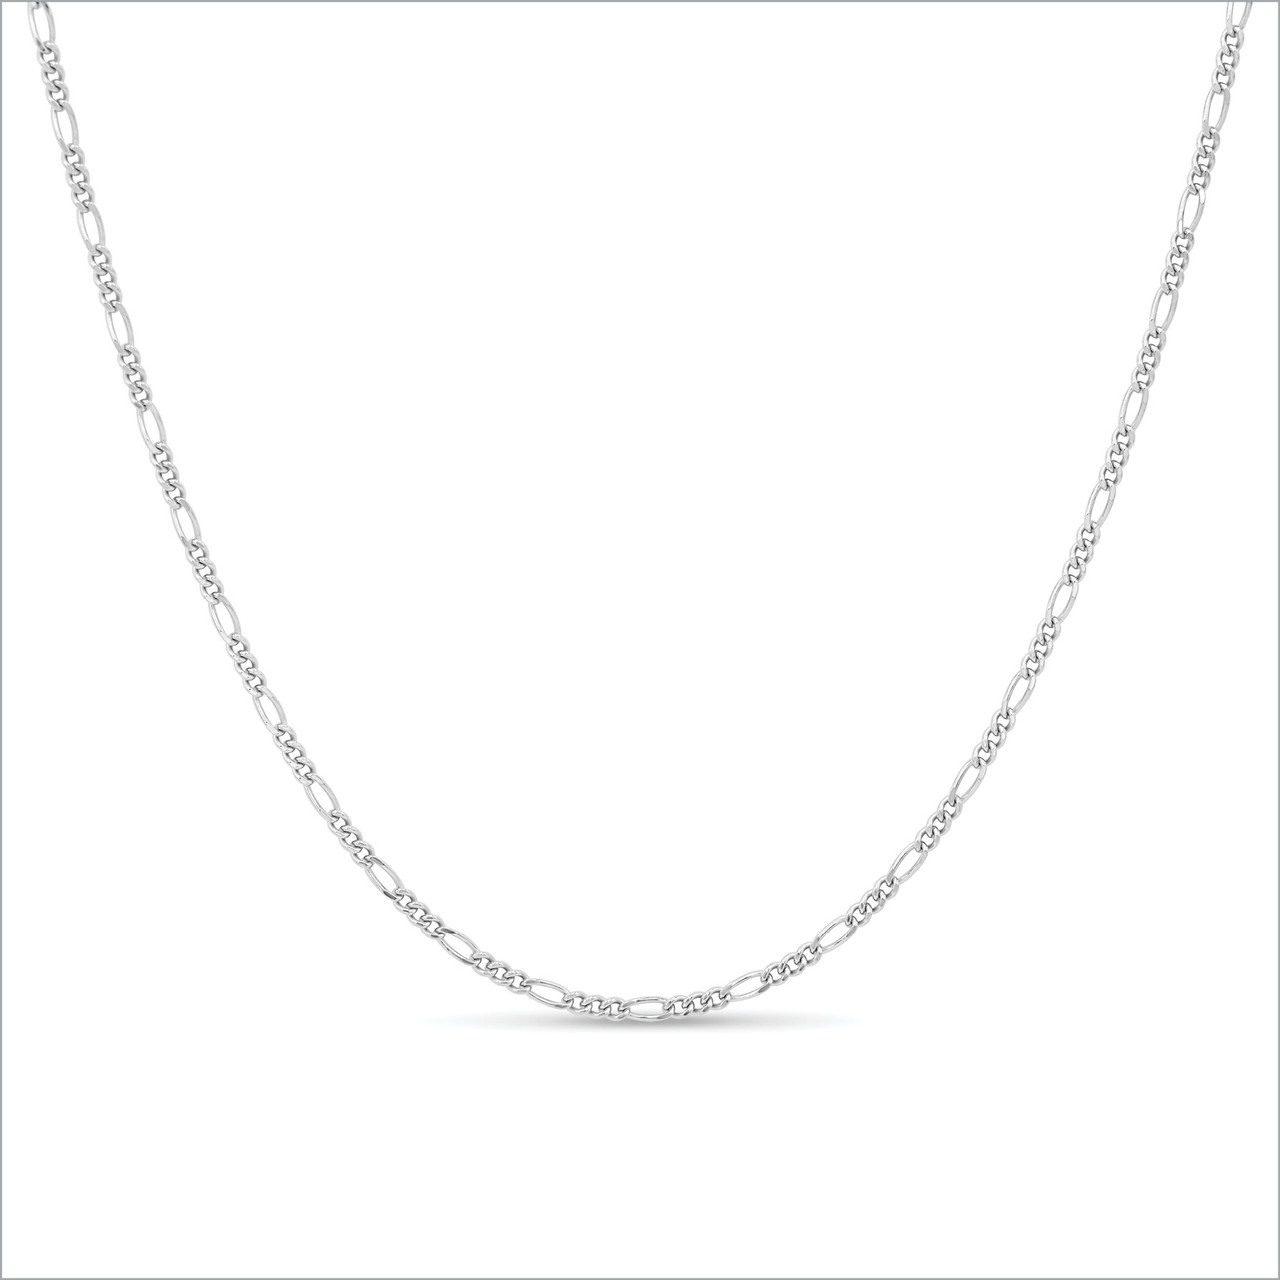 Buy 925 Sterling Silver Figaro Chain Bracelet for Men and Boys 7IN